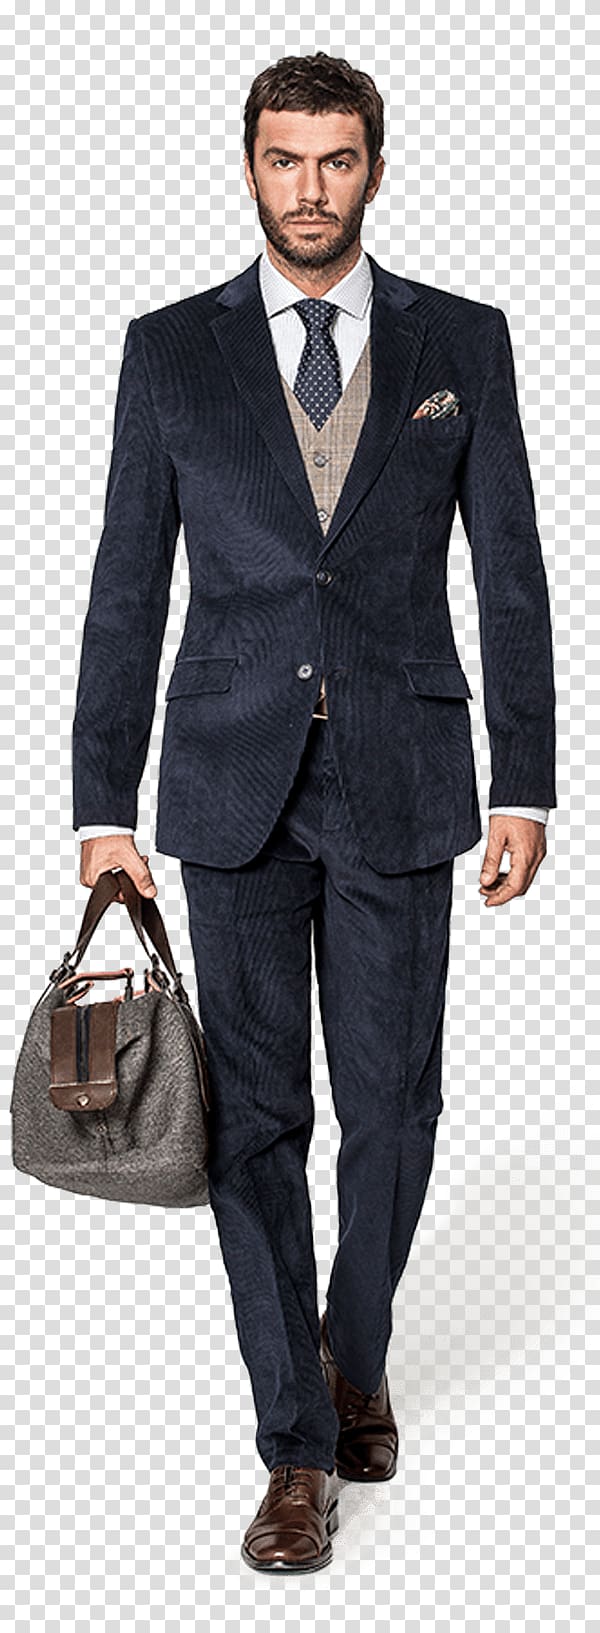 Dress shirt Tuxedo Suit Bespoke tailoring, shirt transparent background ...